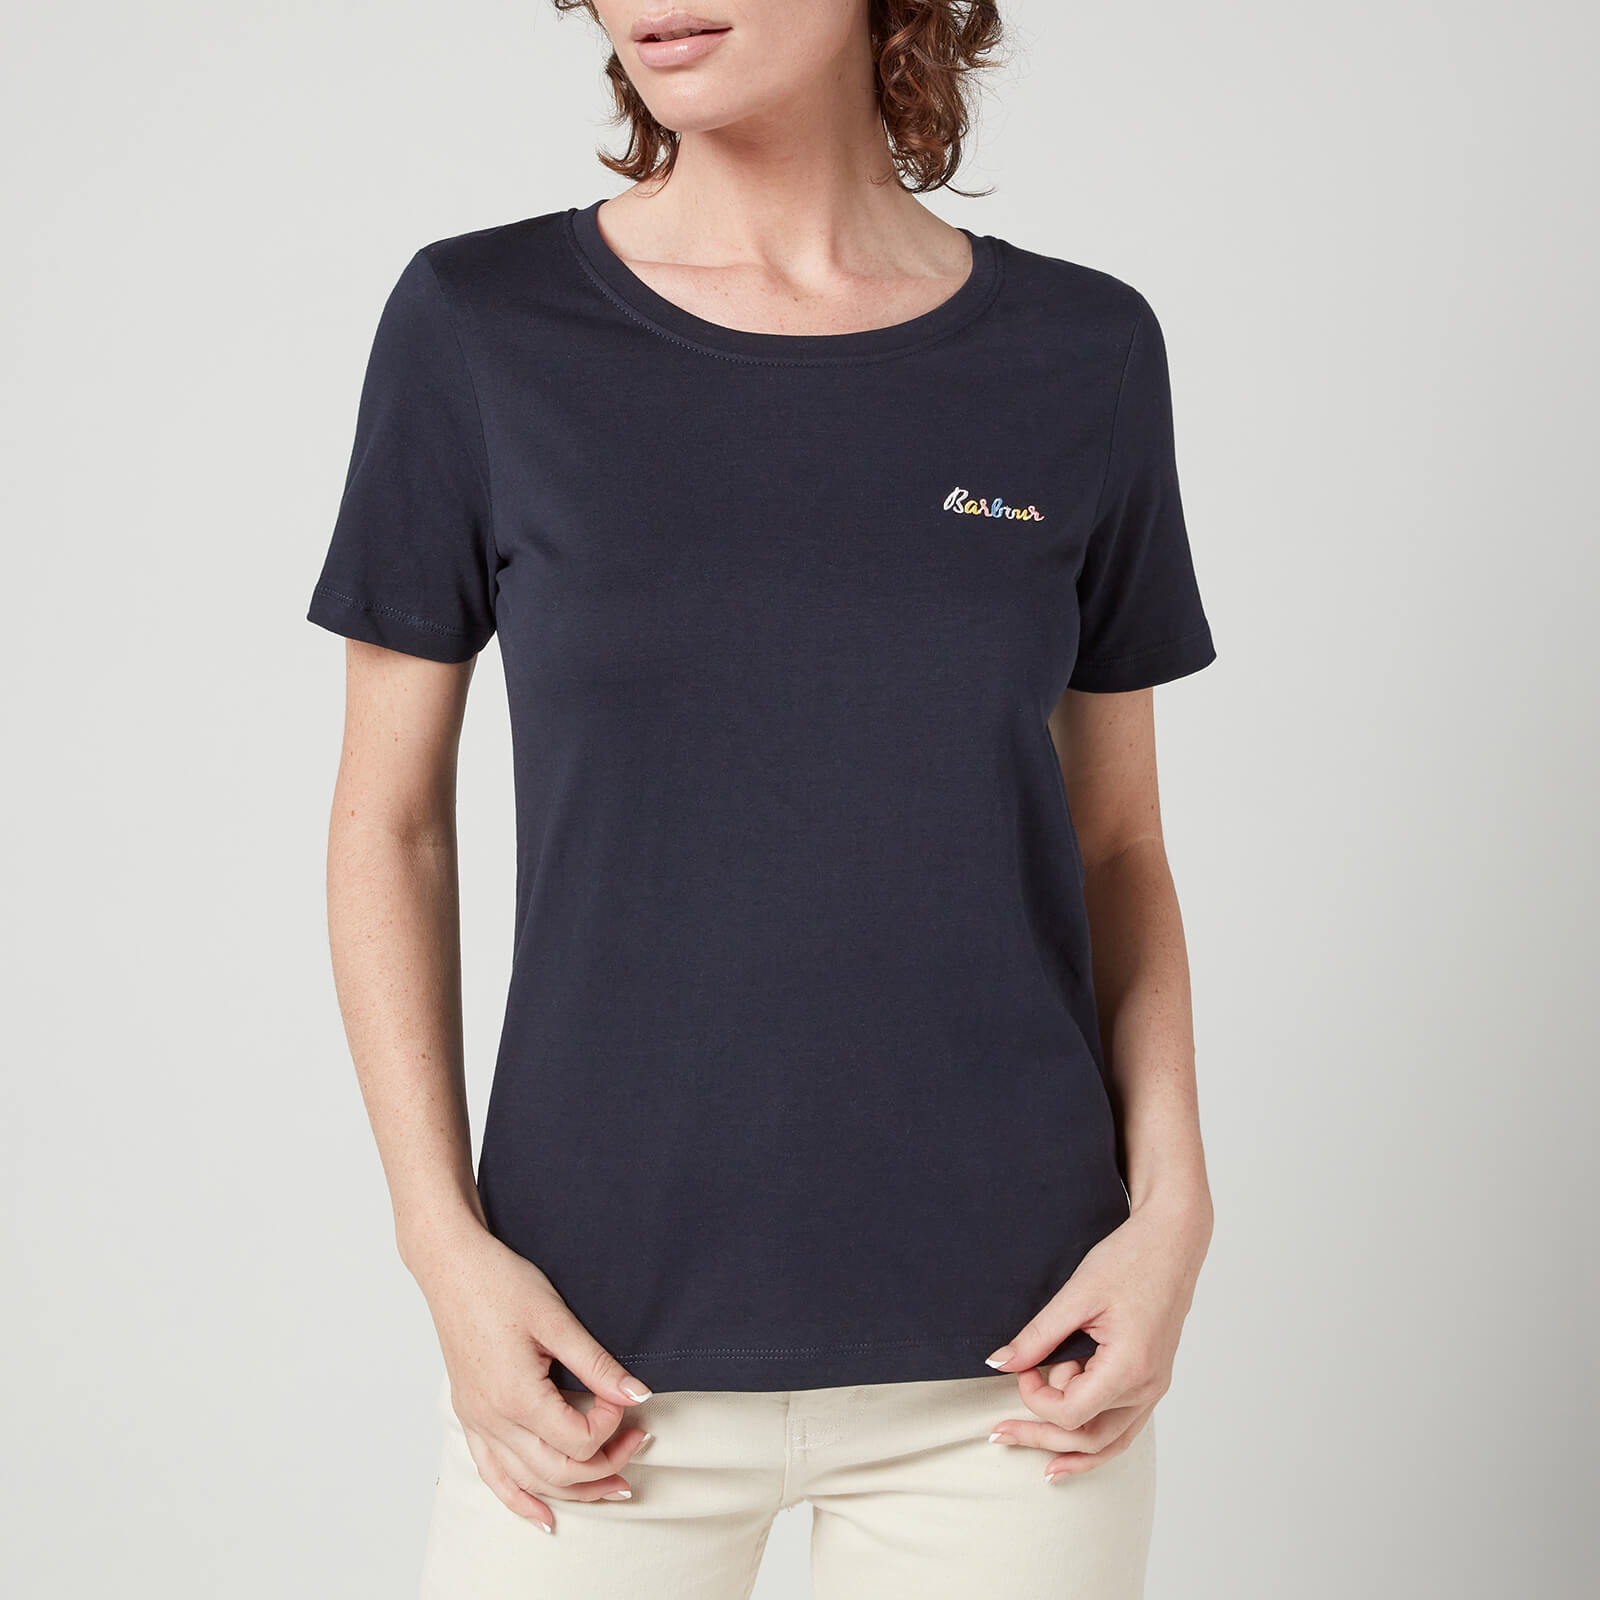 Barbour Women's Amble T-Shirt - Navy - UK 8